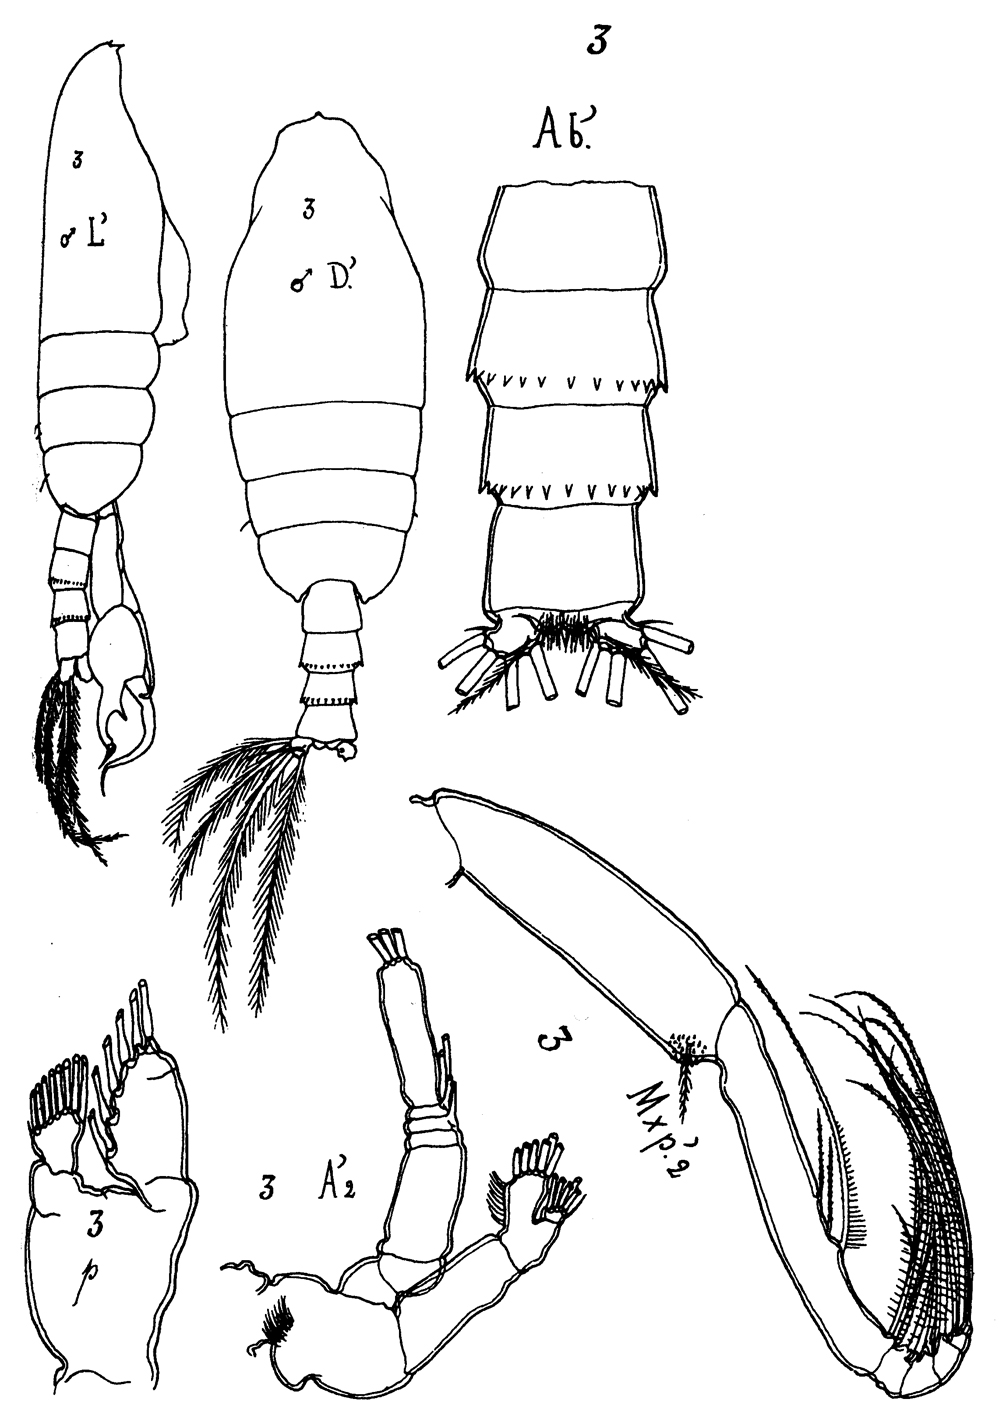 Species Euchirella amoena - Plate 11 of morphological figures